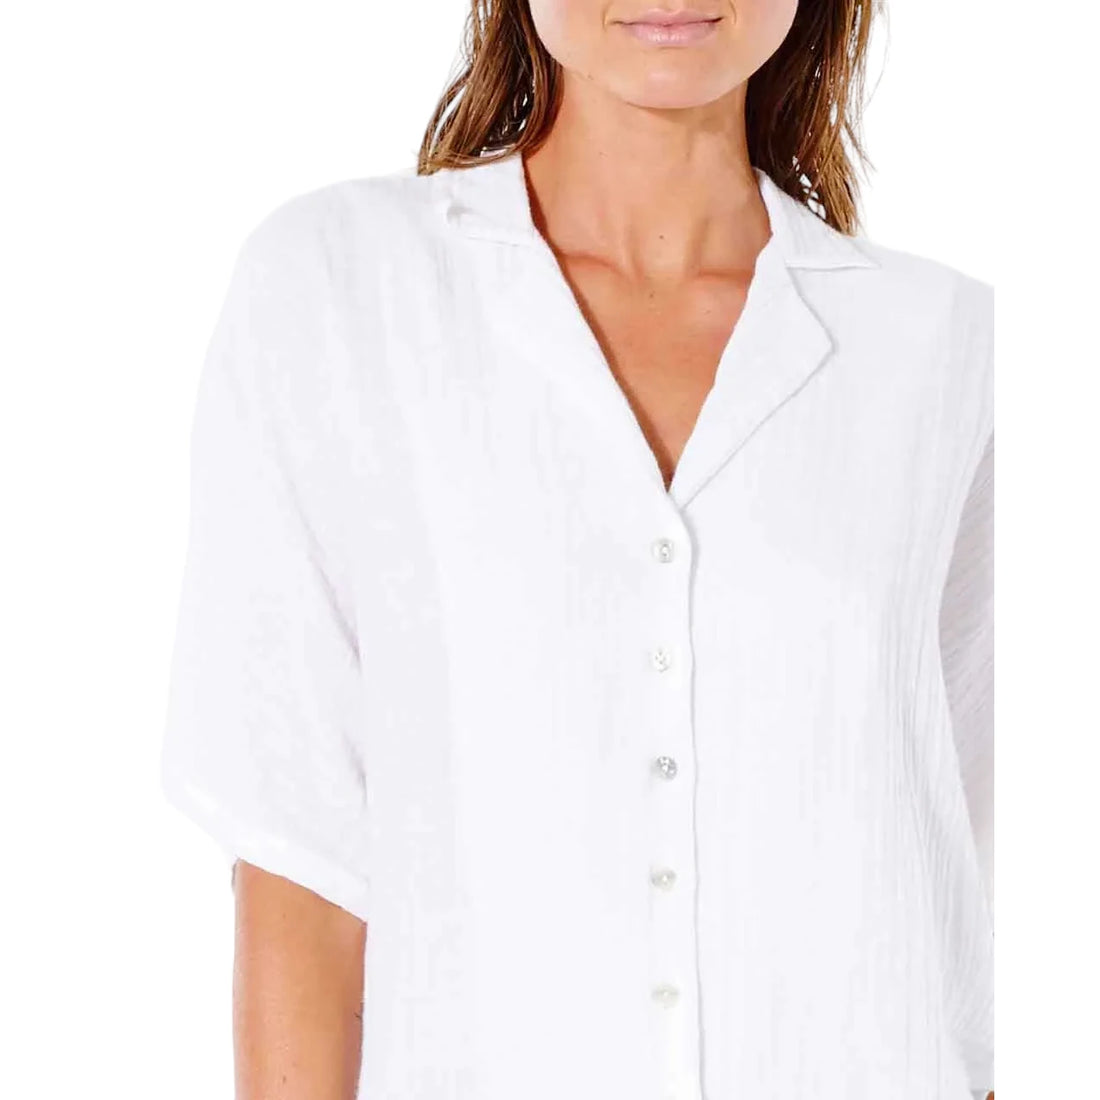 Rip Curl Premium Surf S/S Shirt White